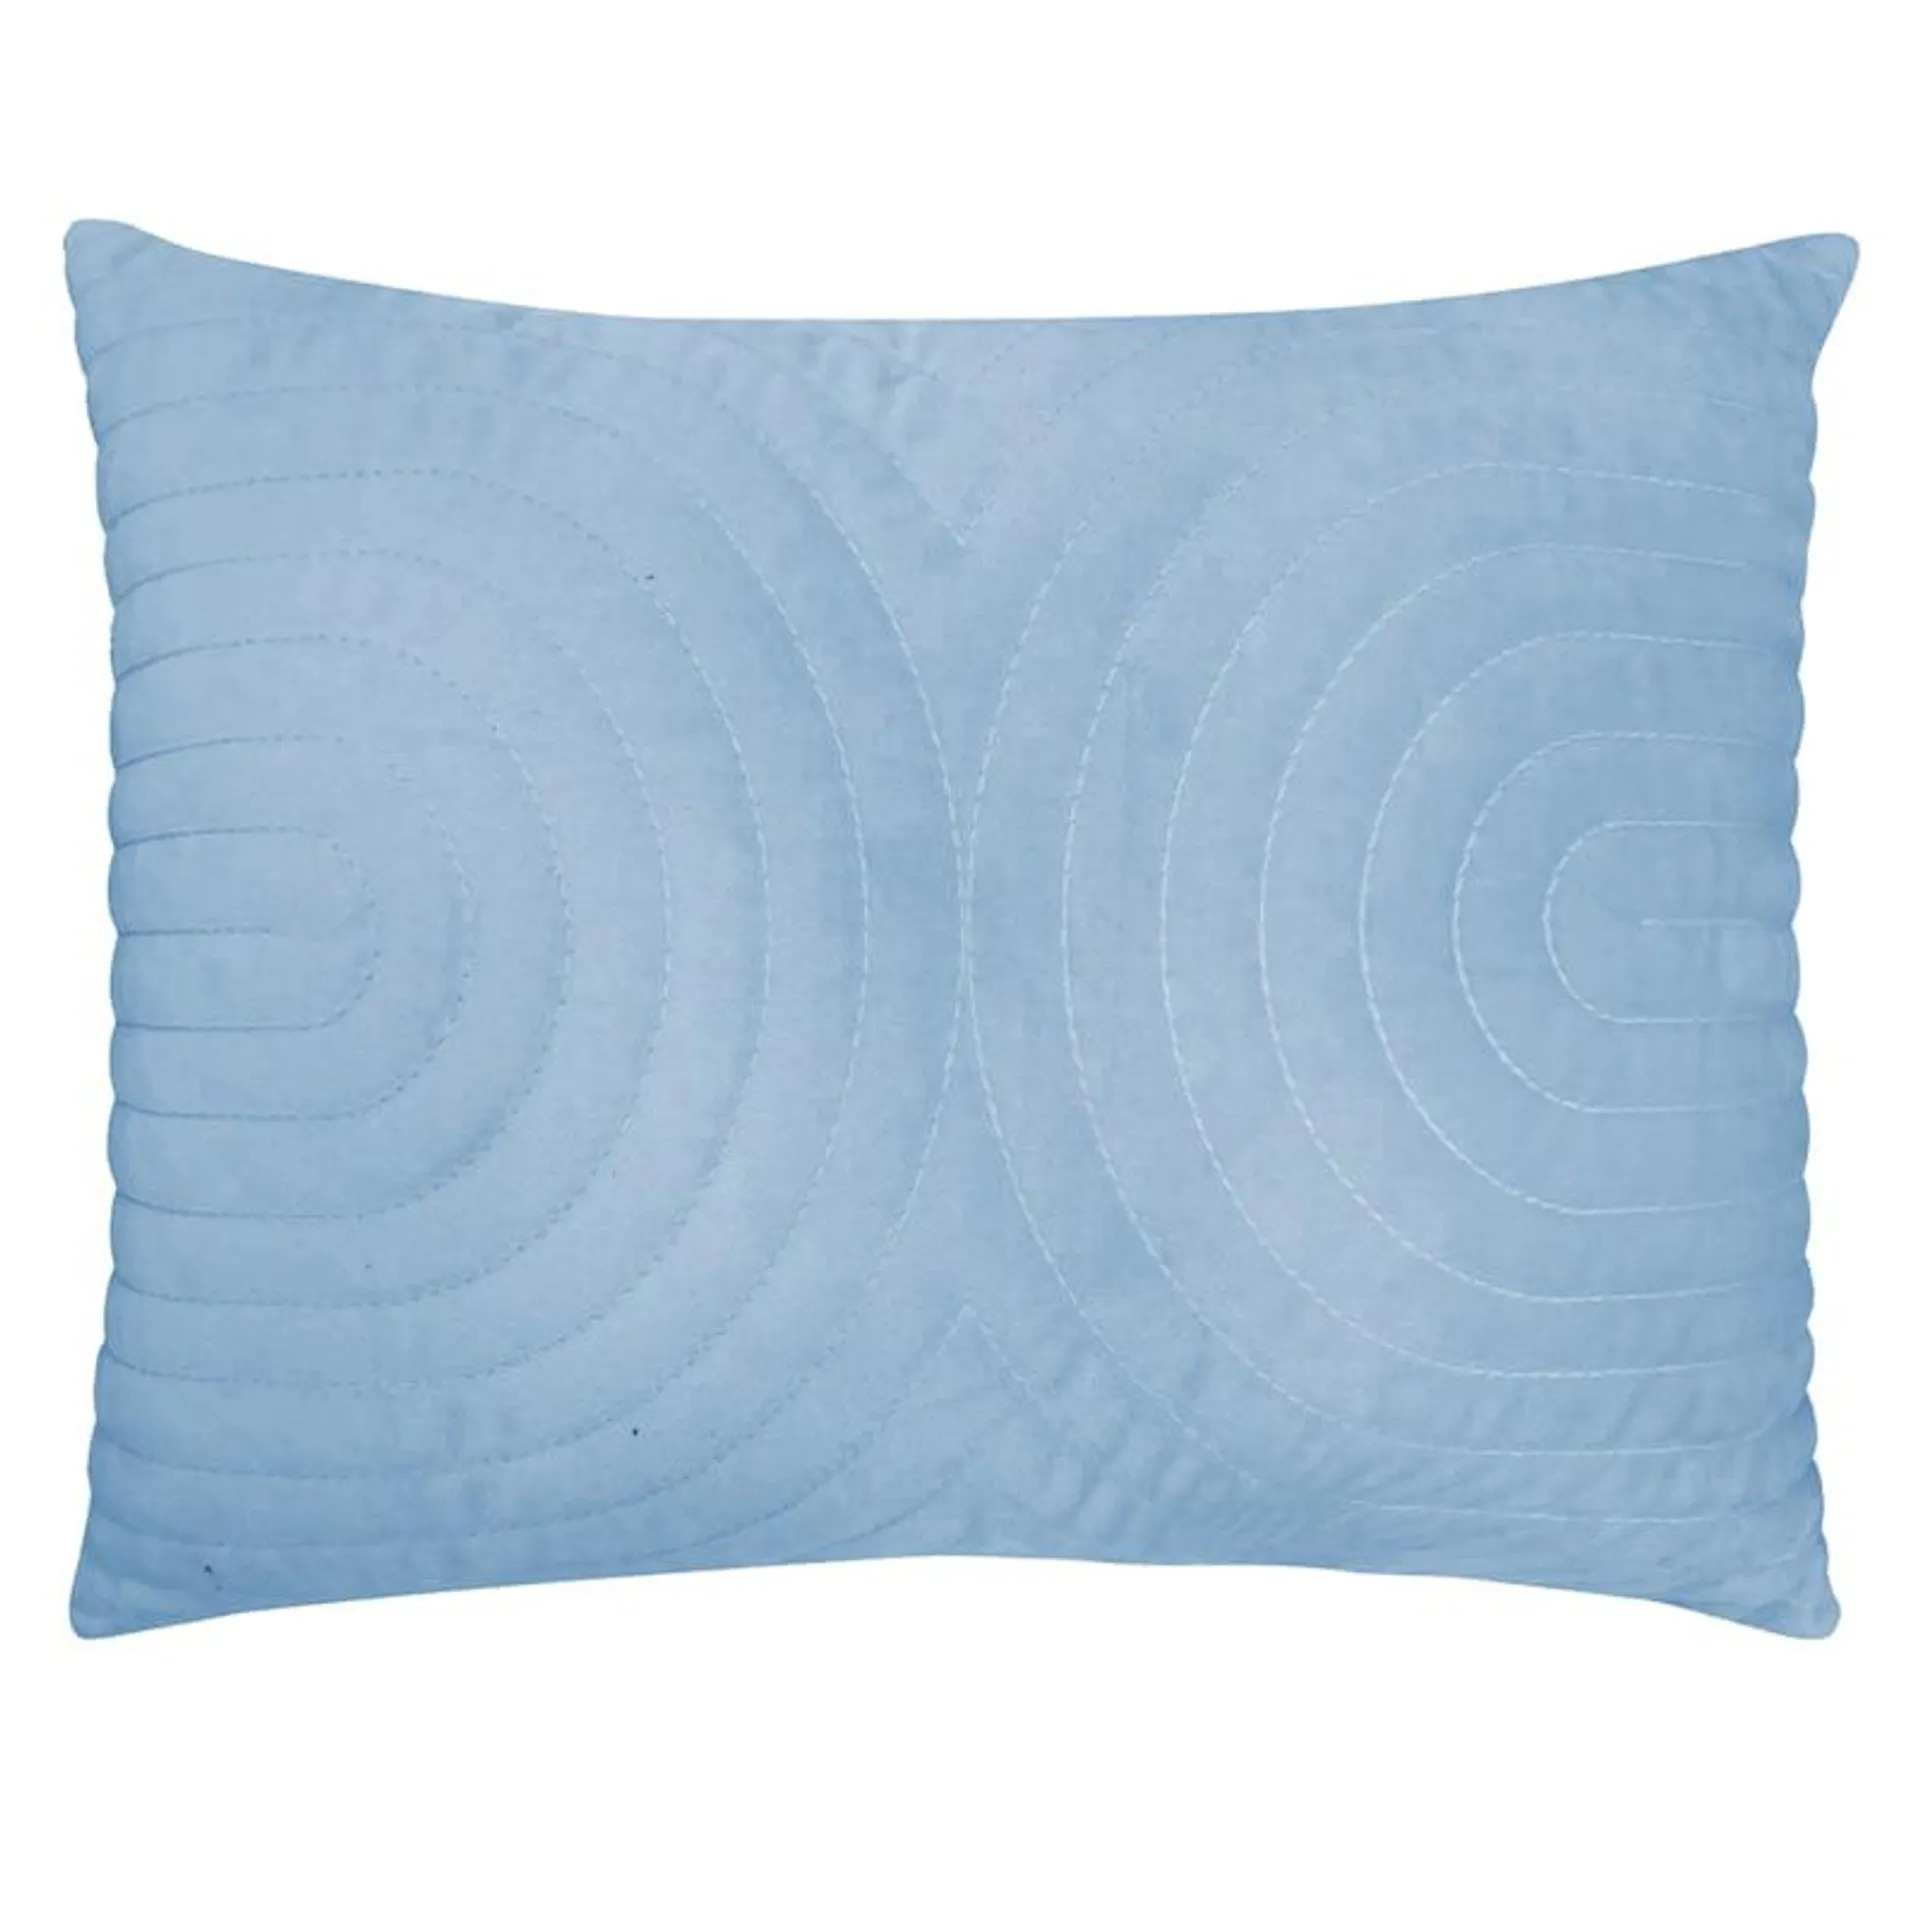 Cendre Blue Sound Waves Oblong Throw Pillow, 14x20